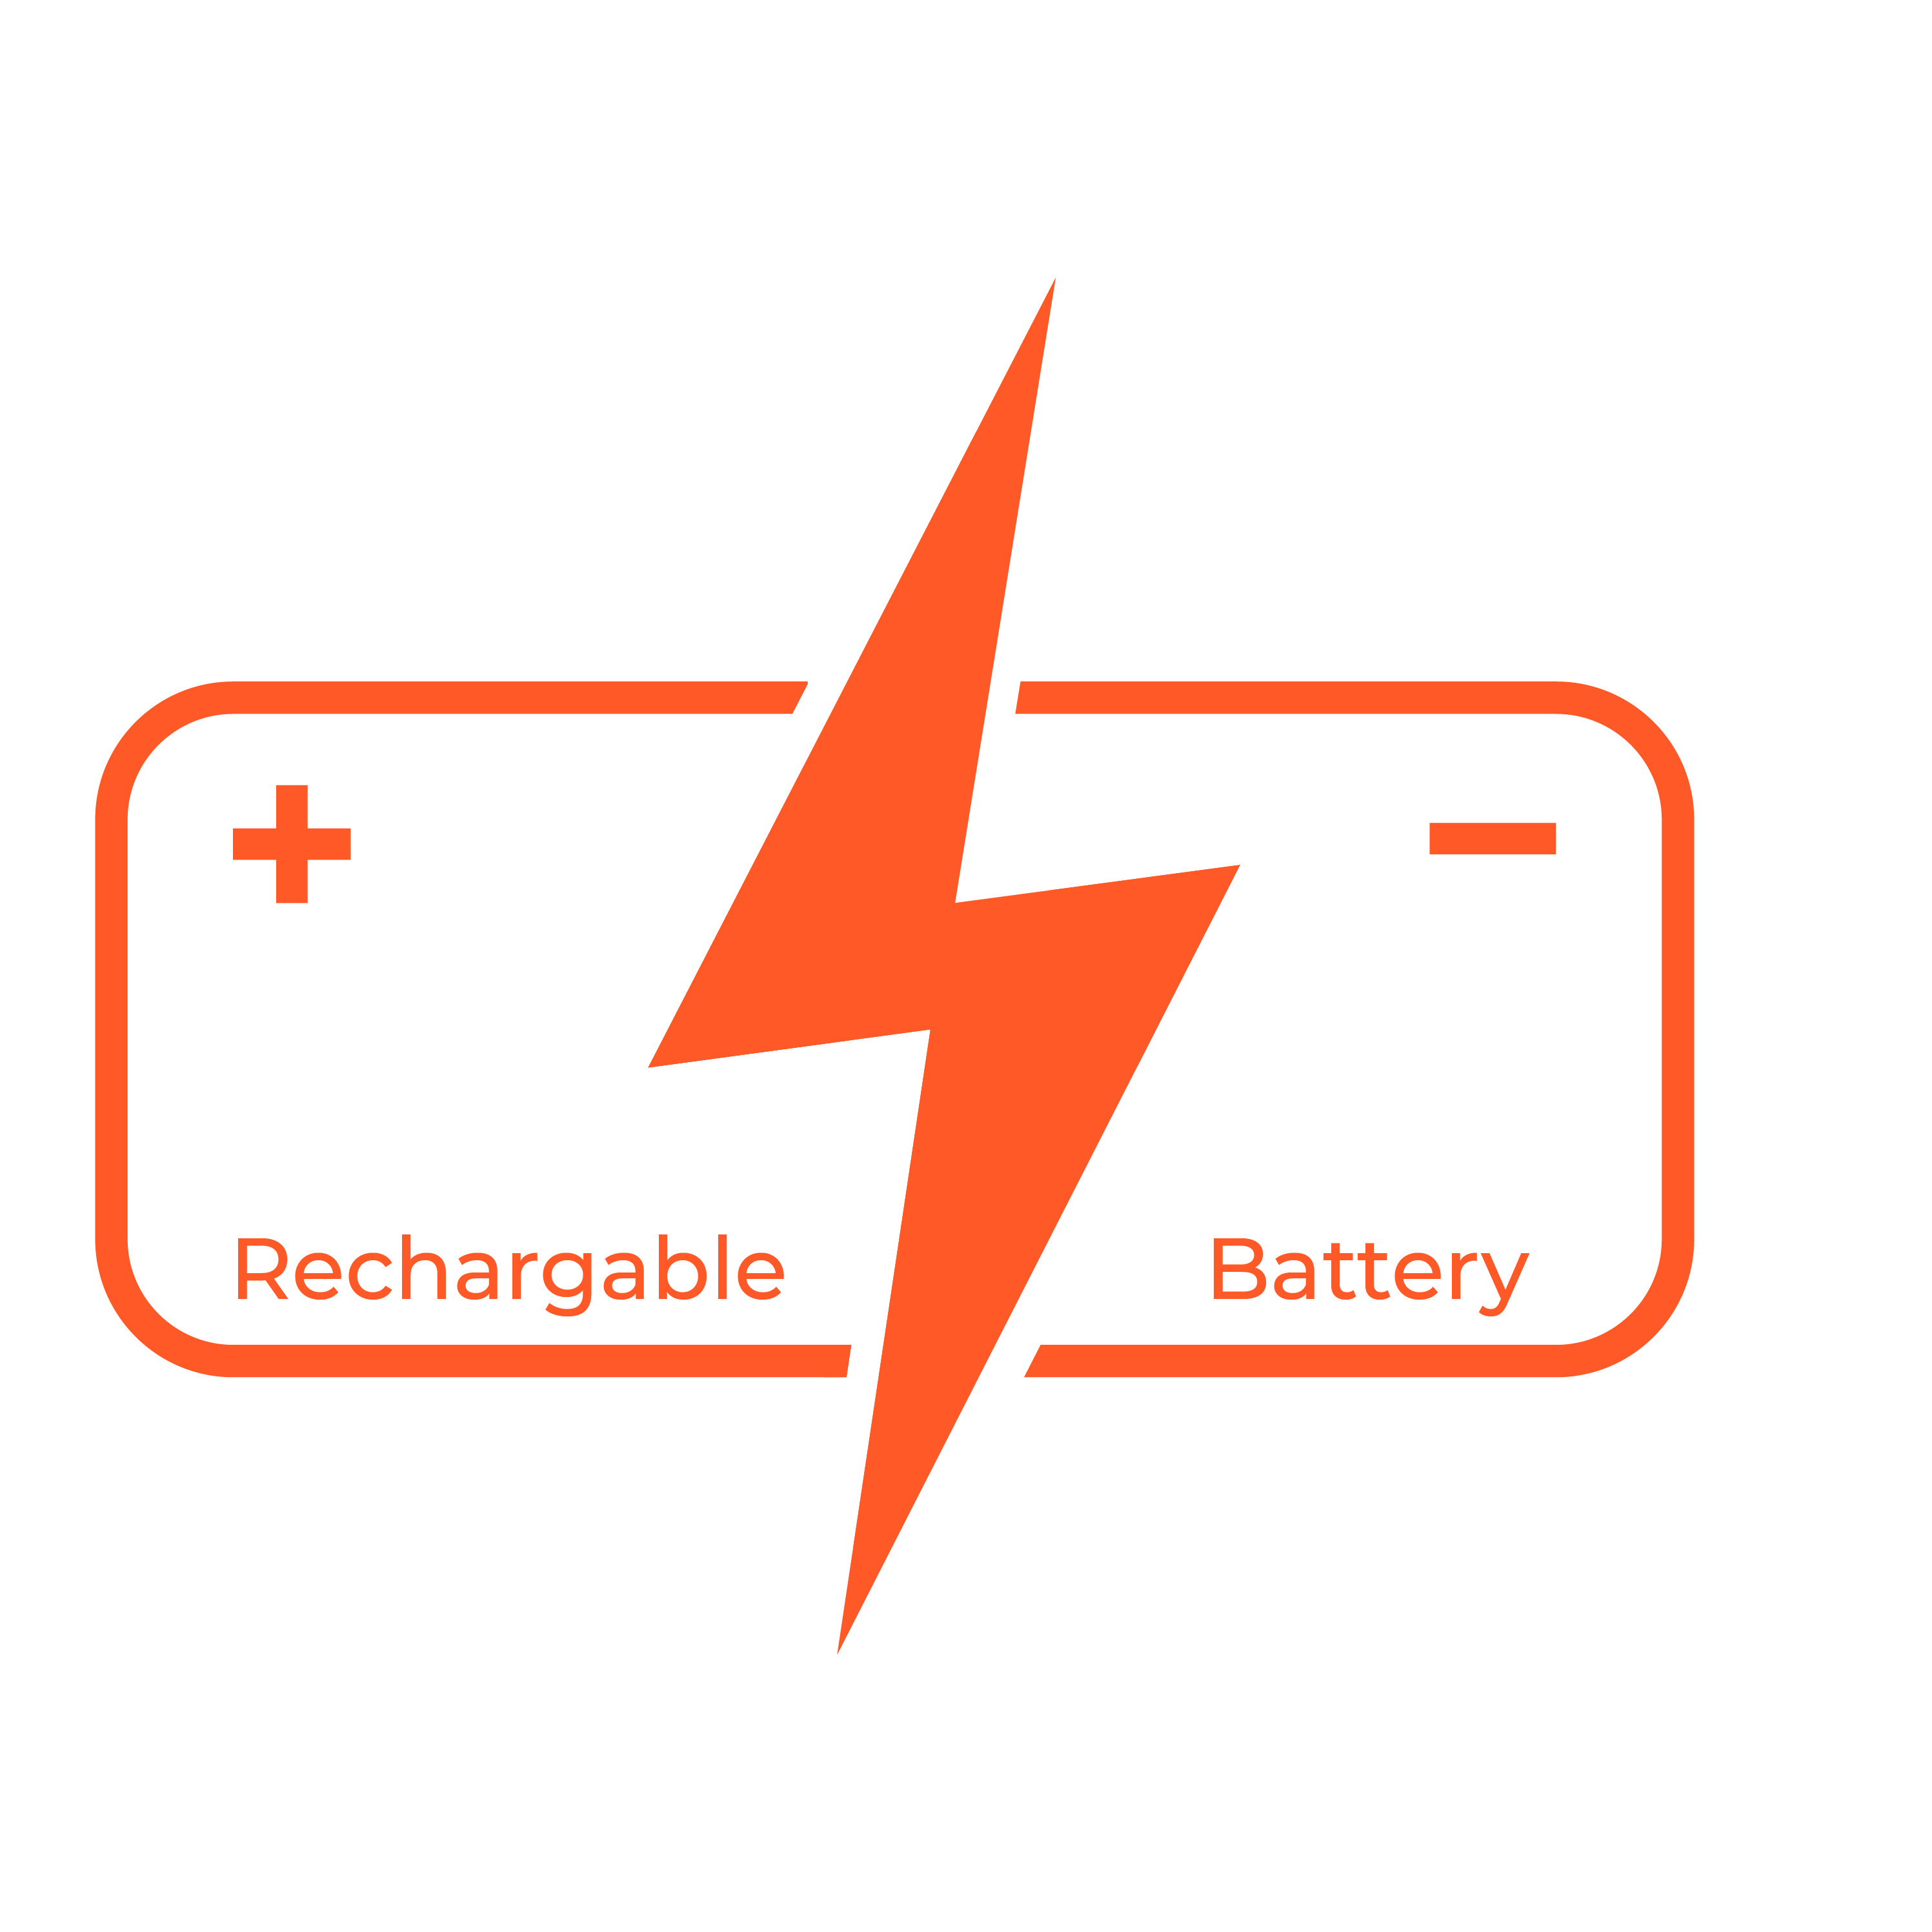 Rechargable Battery